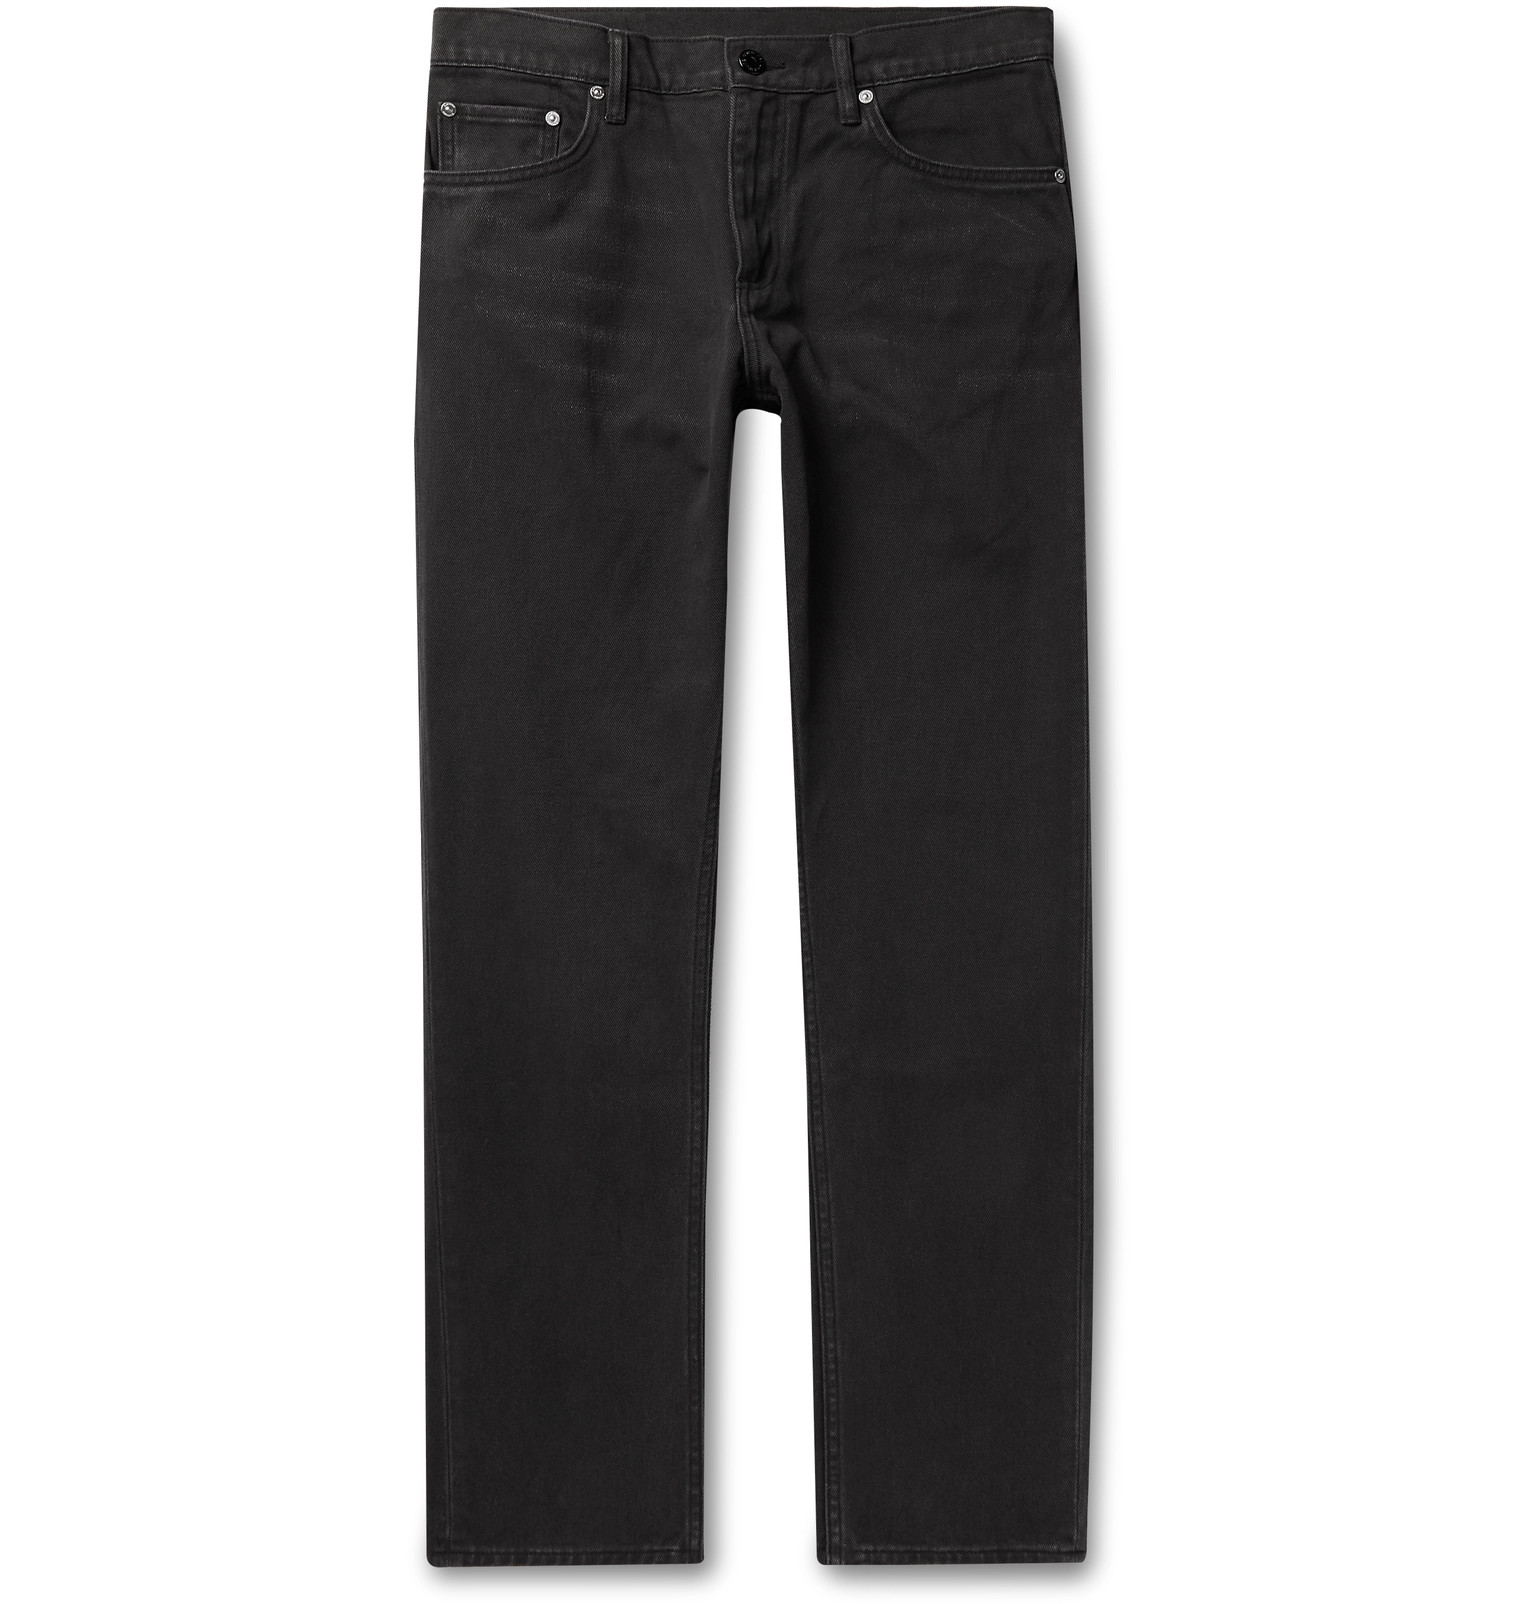 Burberry - Denim Jeans - Men - Black | The Fashionisto